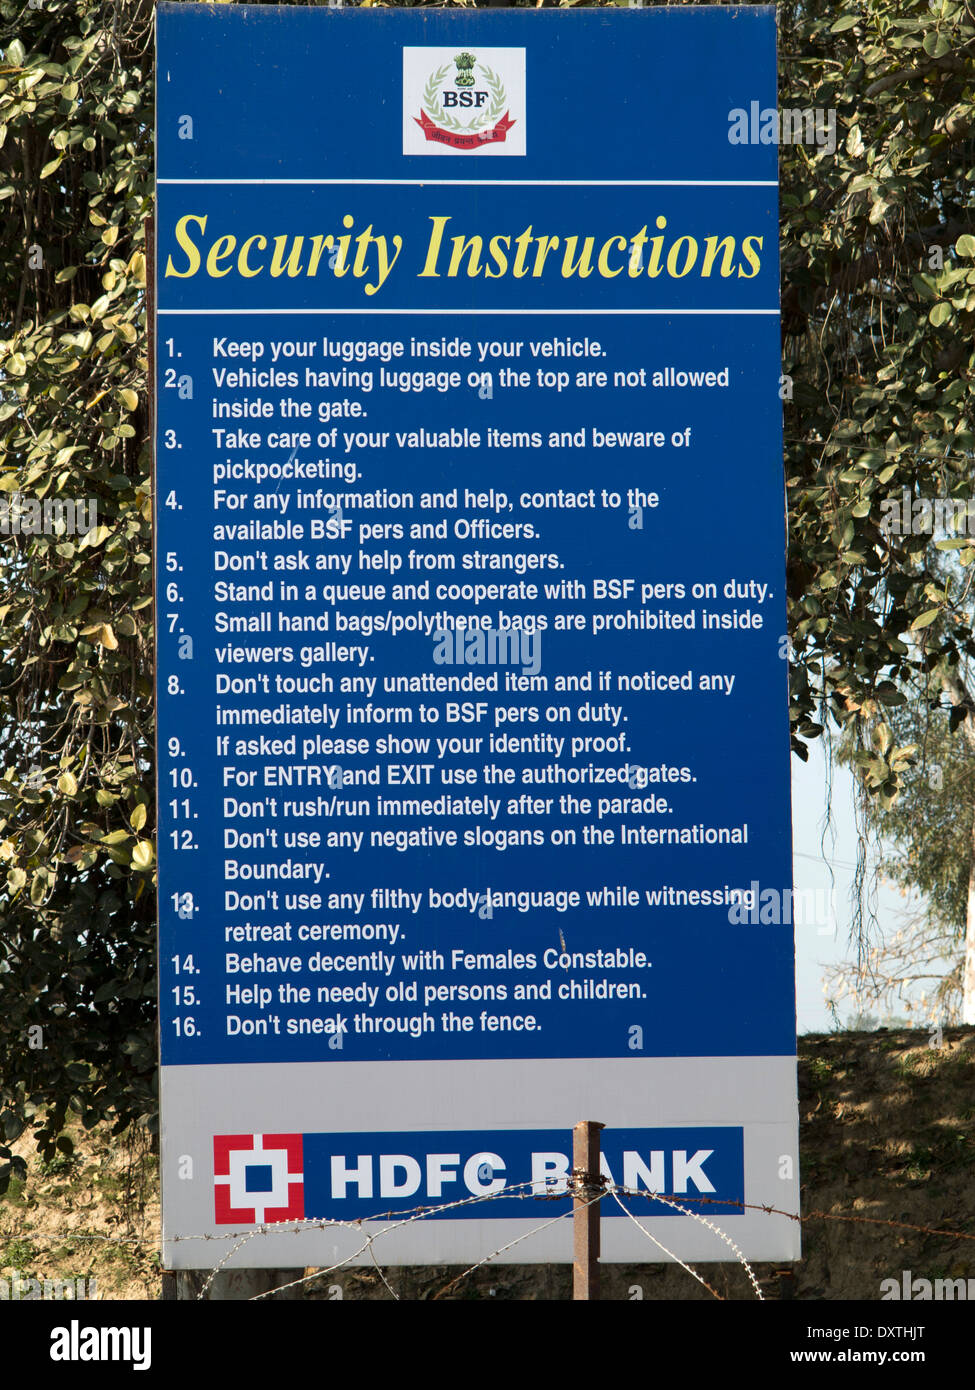 India, Punjab, Amritsar, Wagah border post with Pakistan, hdfc bank sponsored security instruction sign Stock Photo